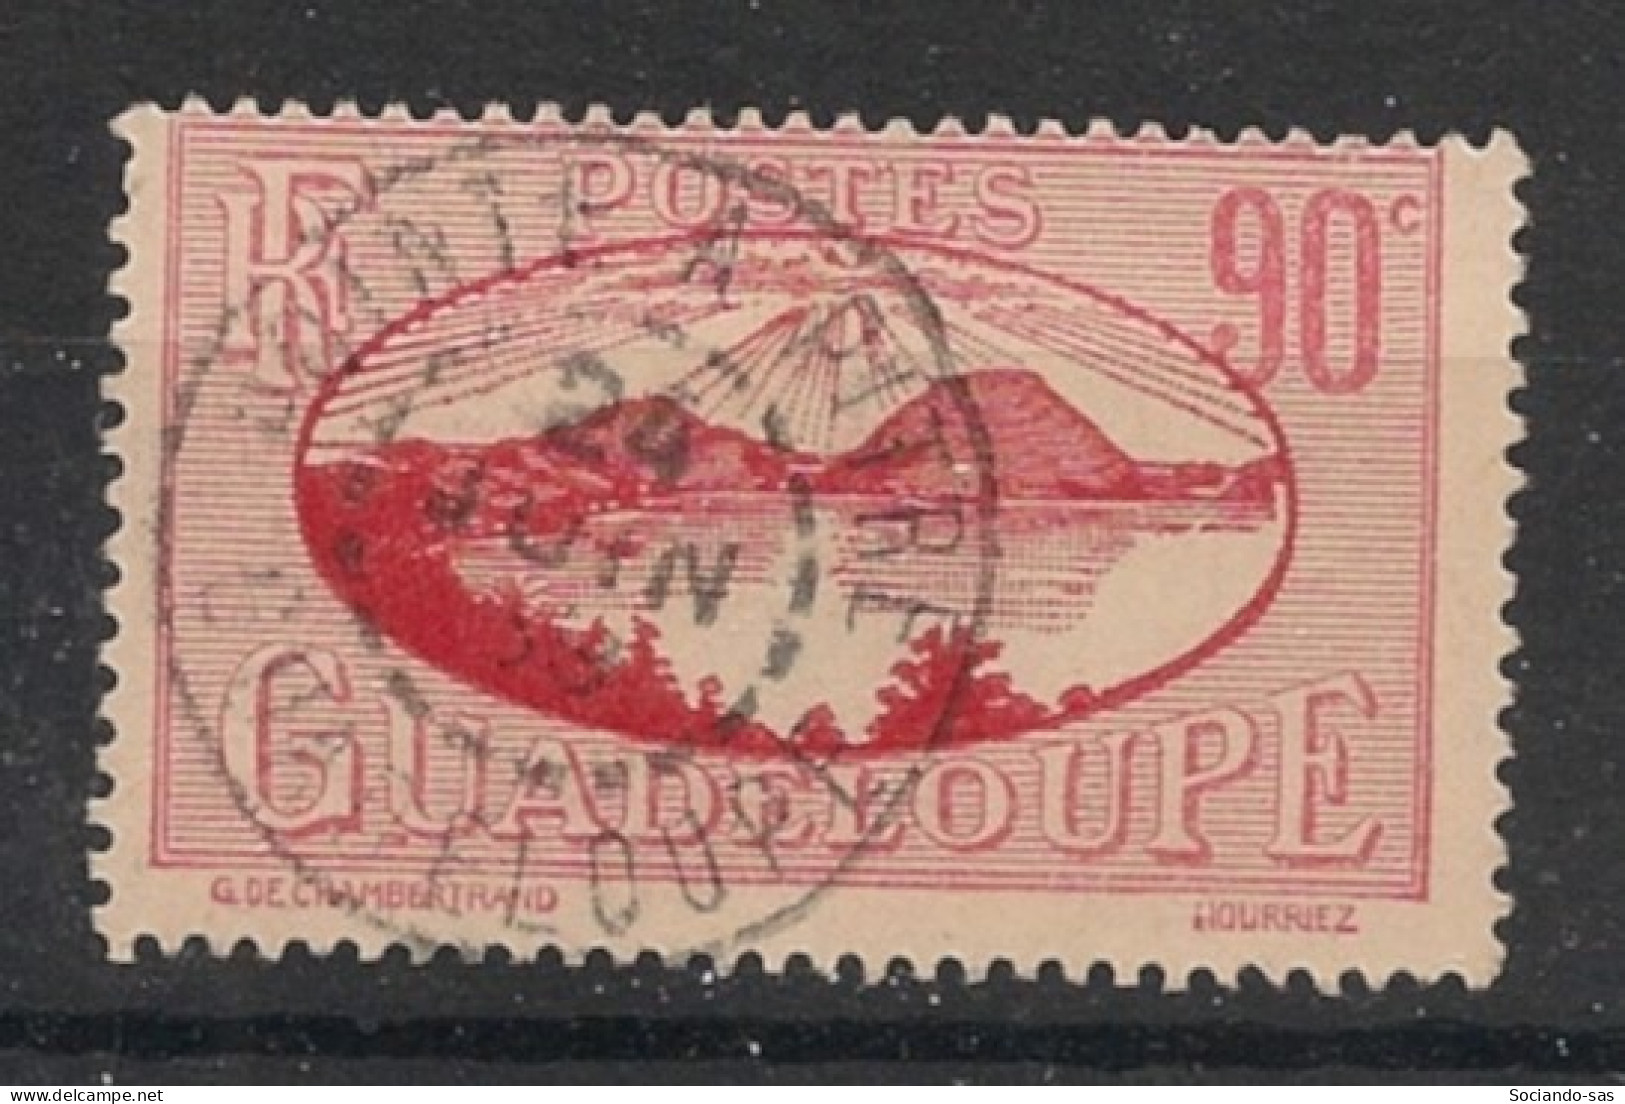 GUADELOUPE - 1928-38 - N°YT. 113 - Rade Des Saintes 90c - Oblitéré / Used - Used Stamps